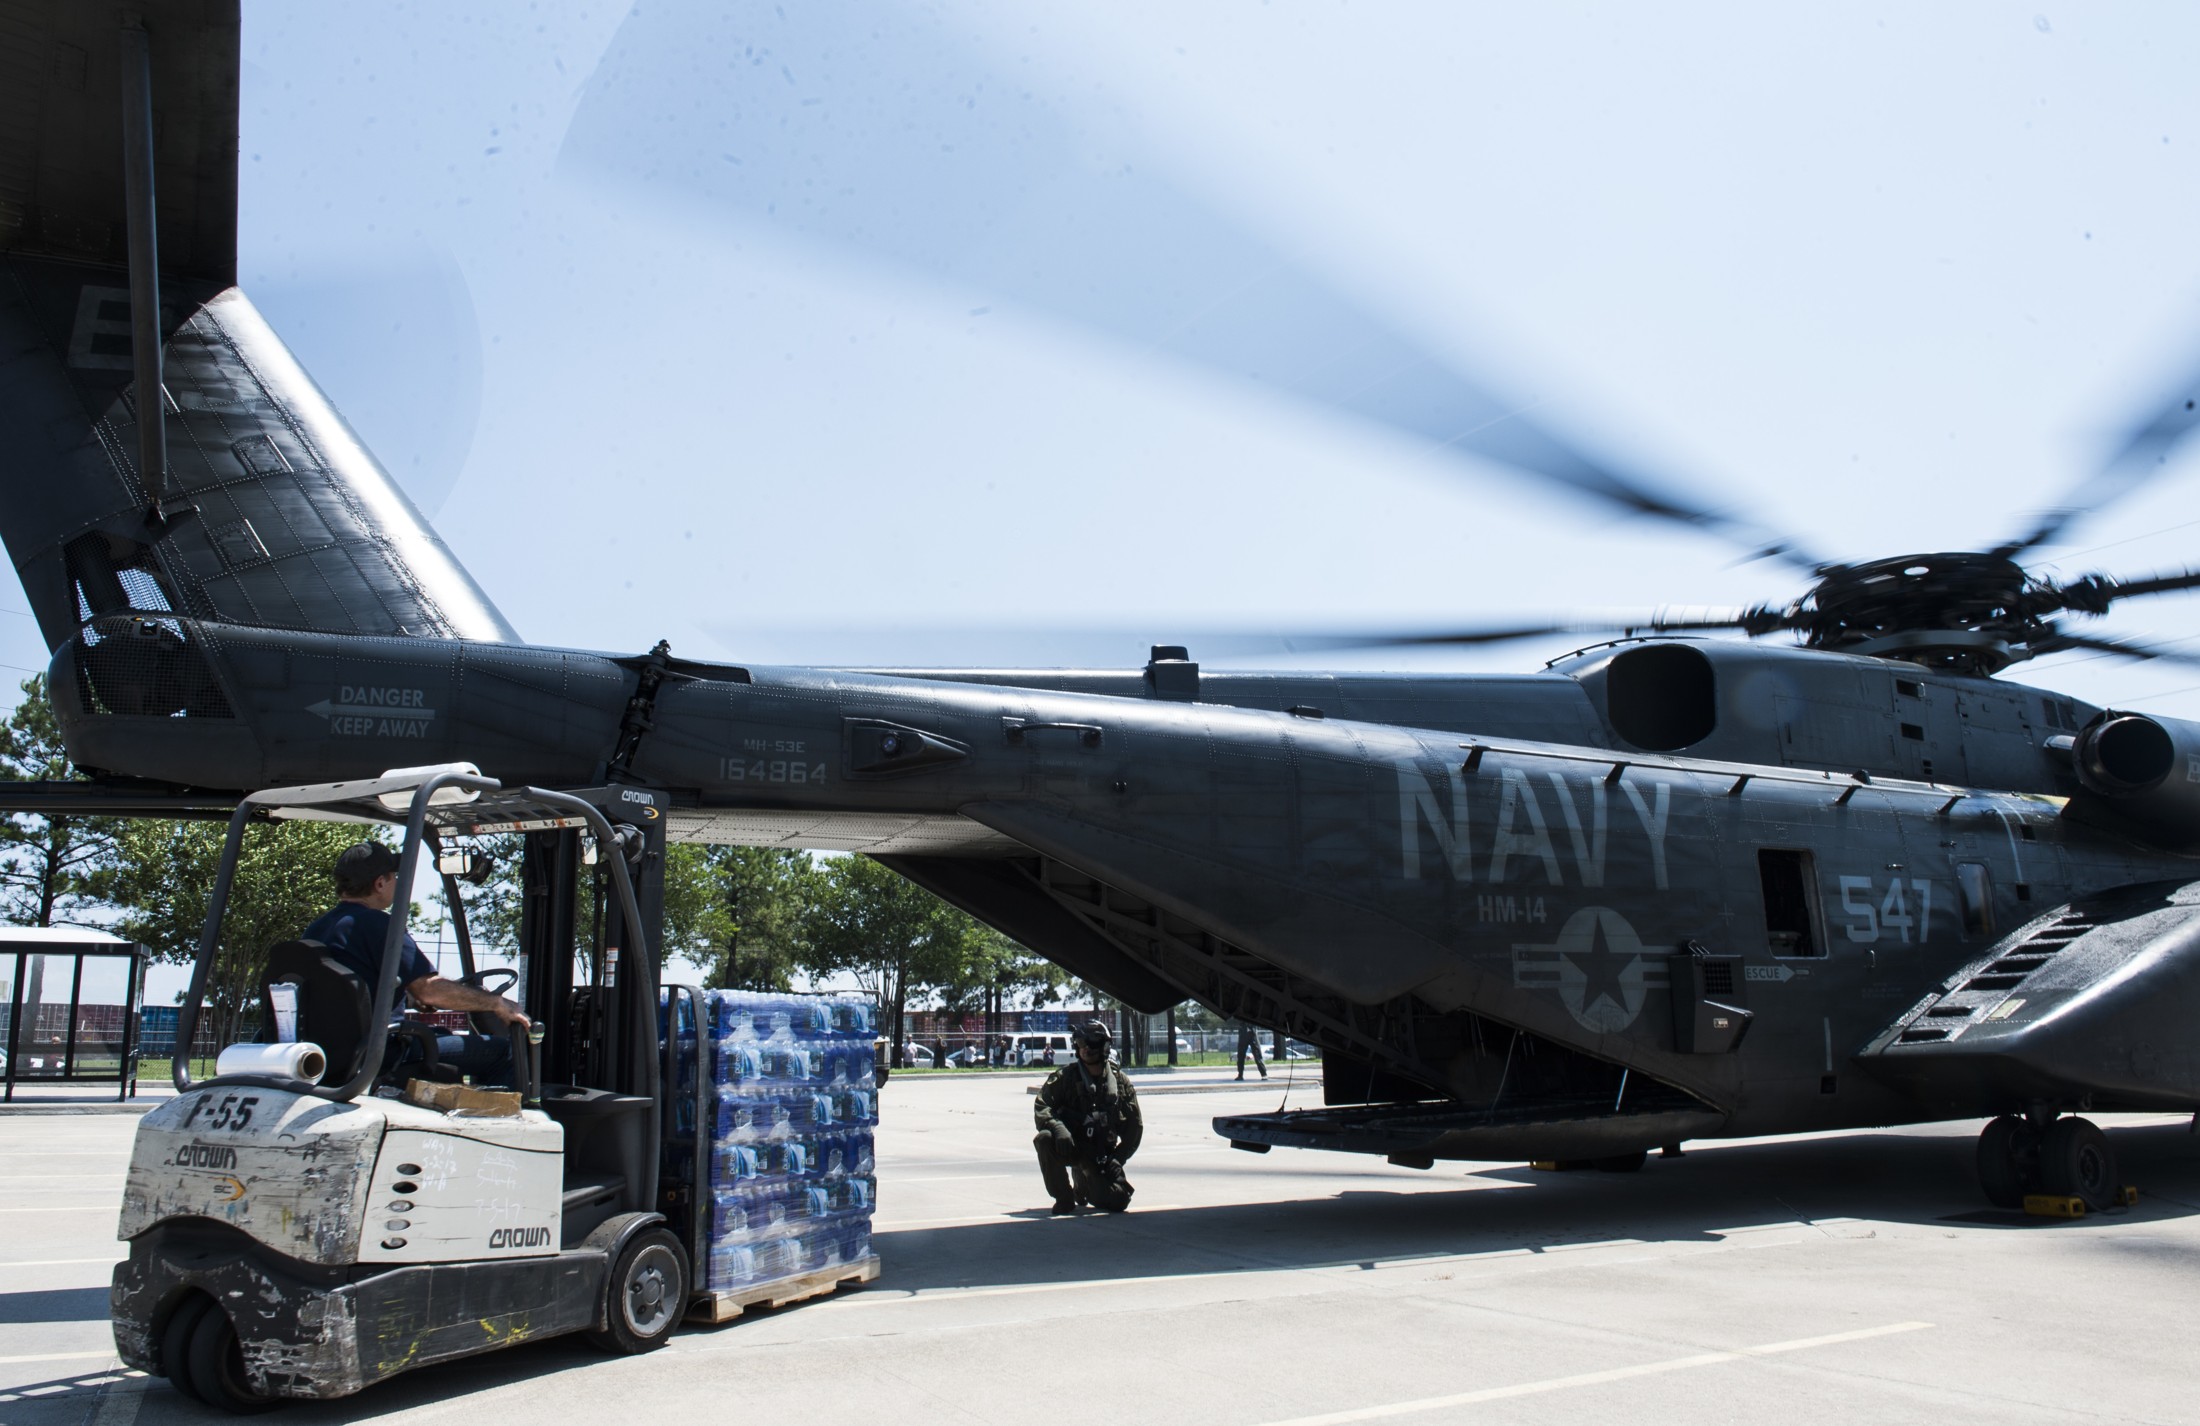 hm-14 vanguard helicopter mine countermeasures squadron navy mh-53e sea dragon 138 katy texas